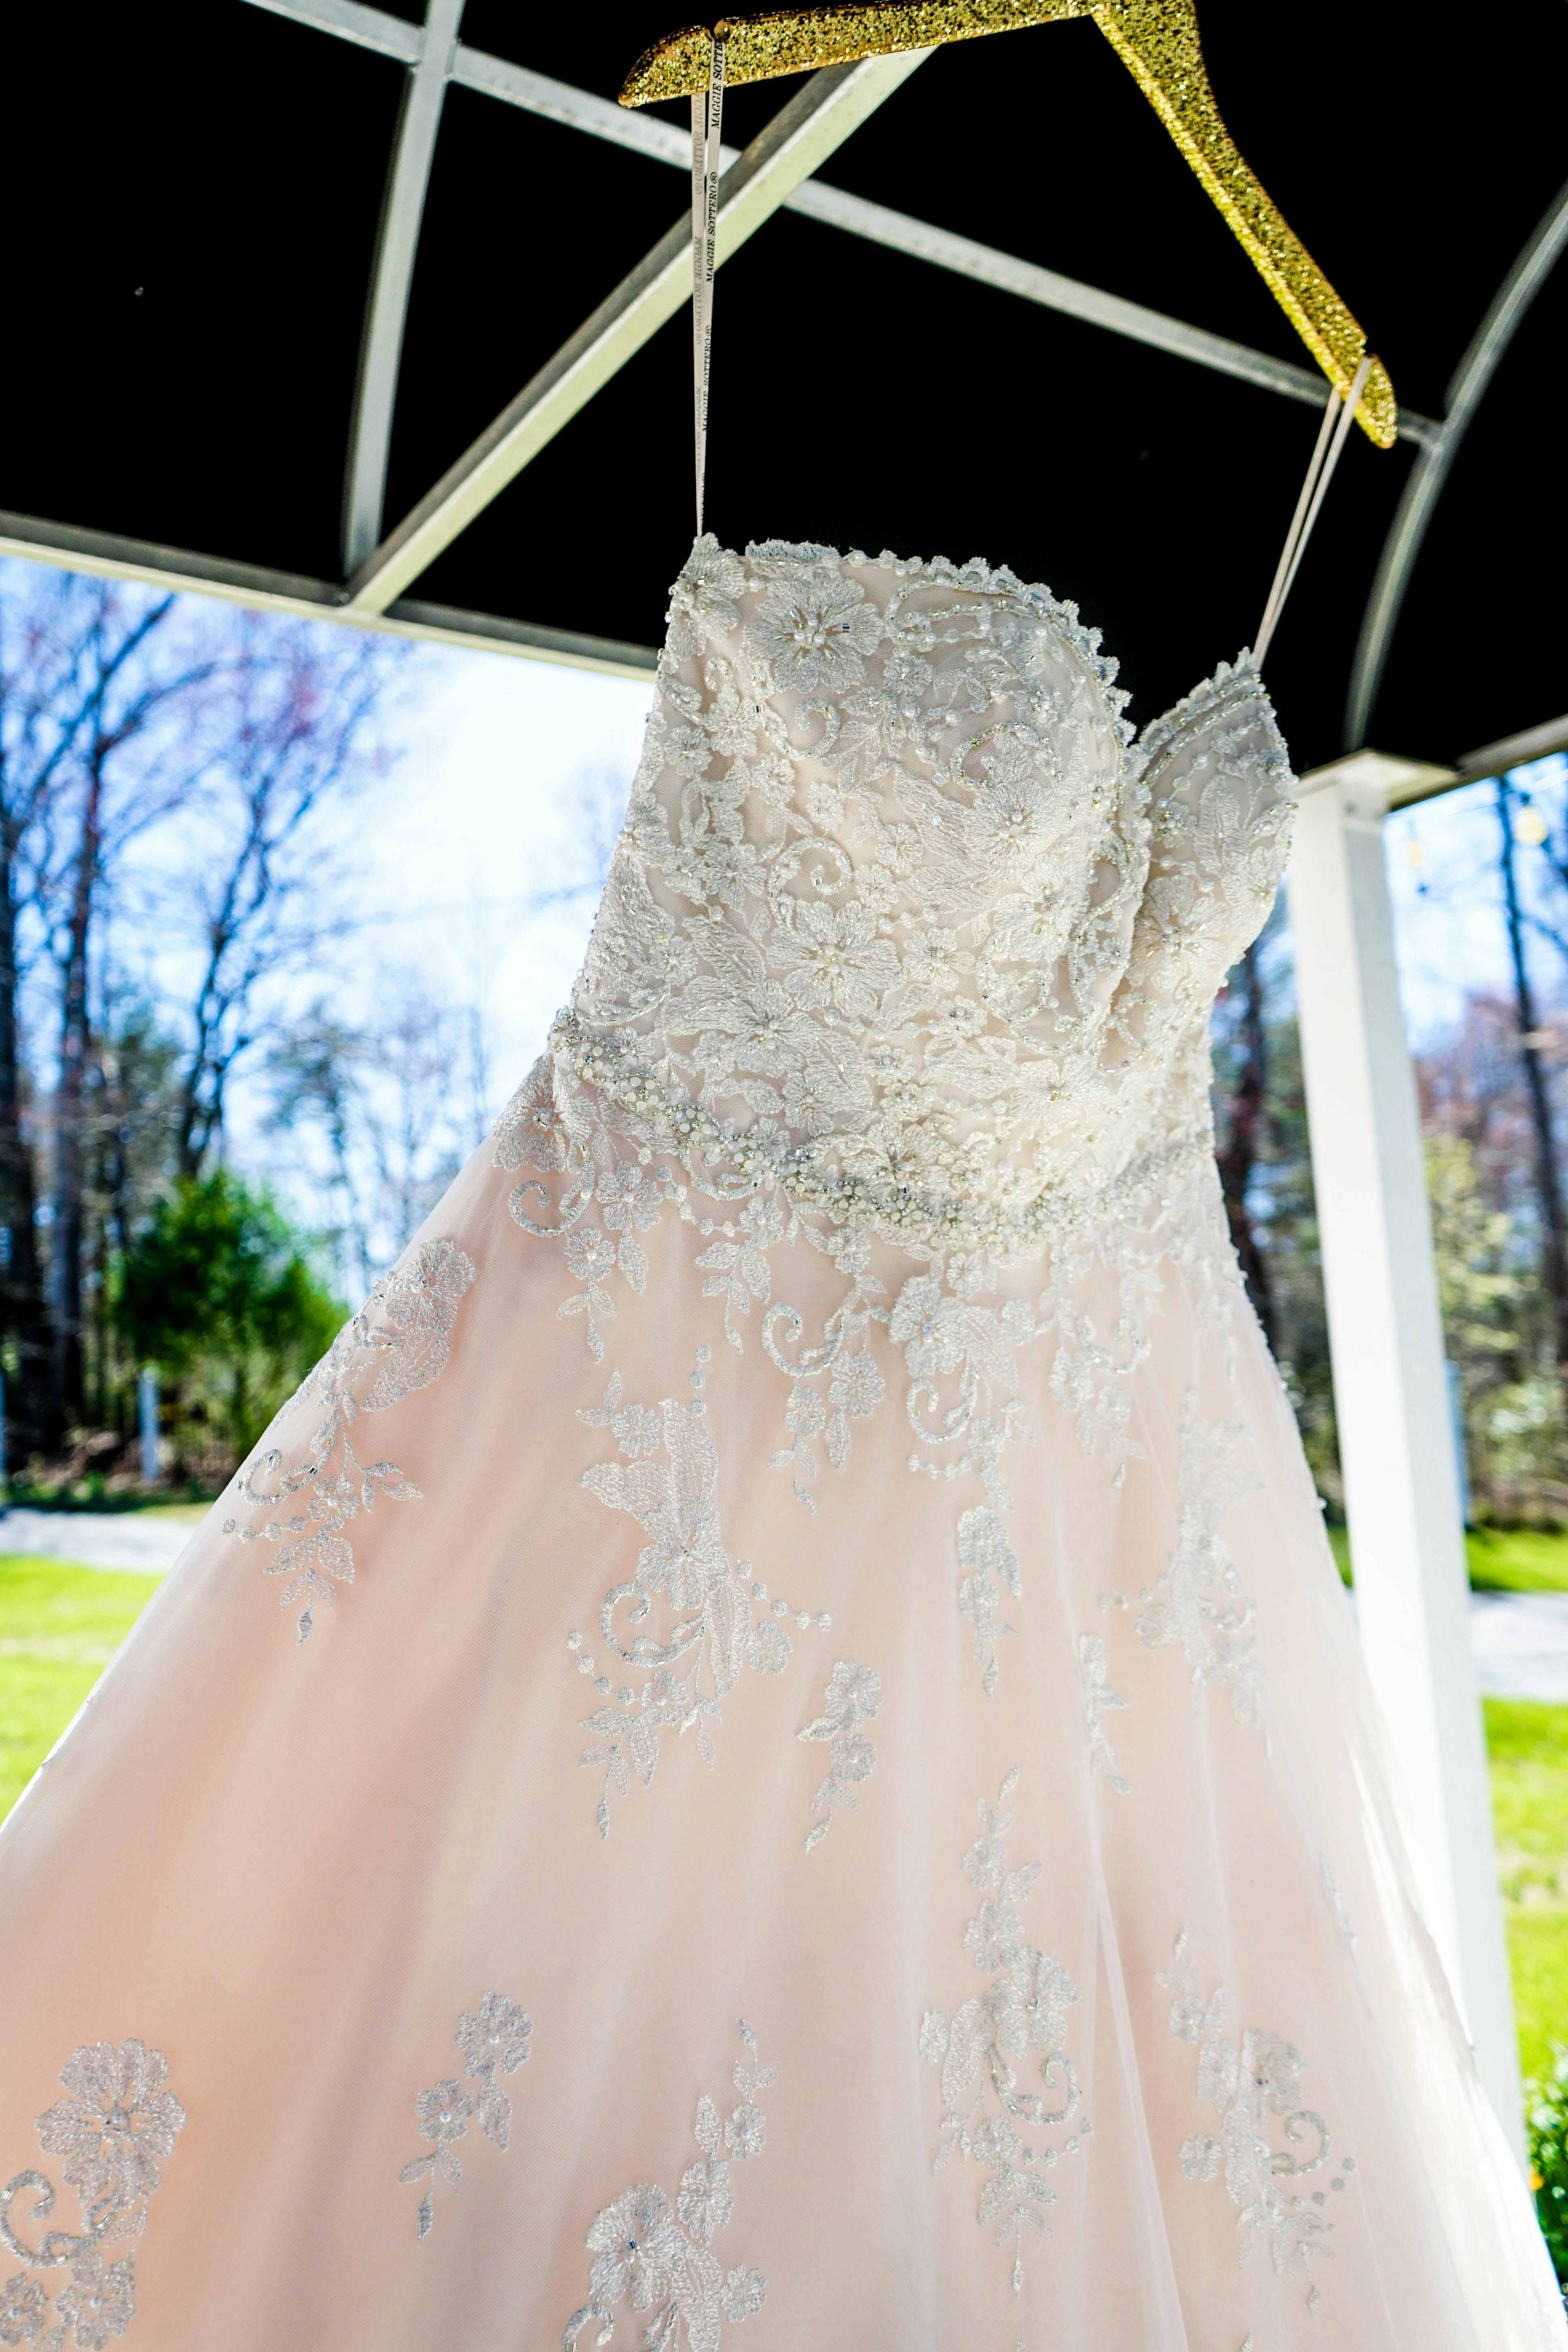 white floral sweetheart wedding gown hanging inside gazebo